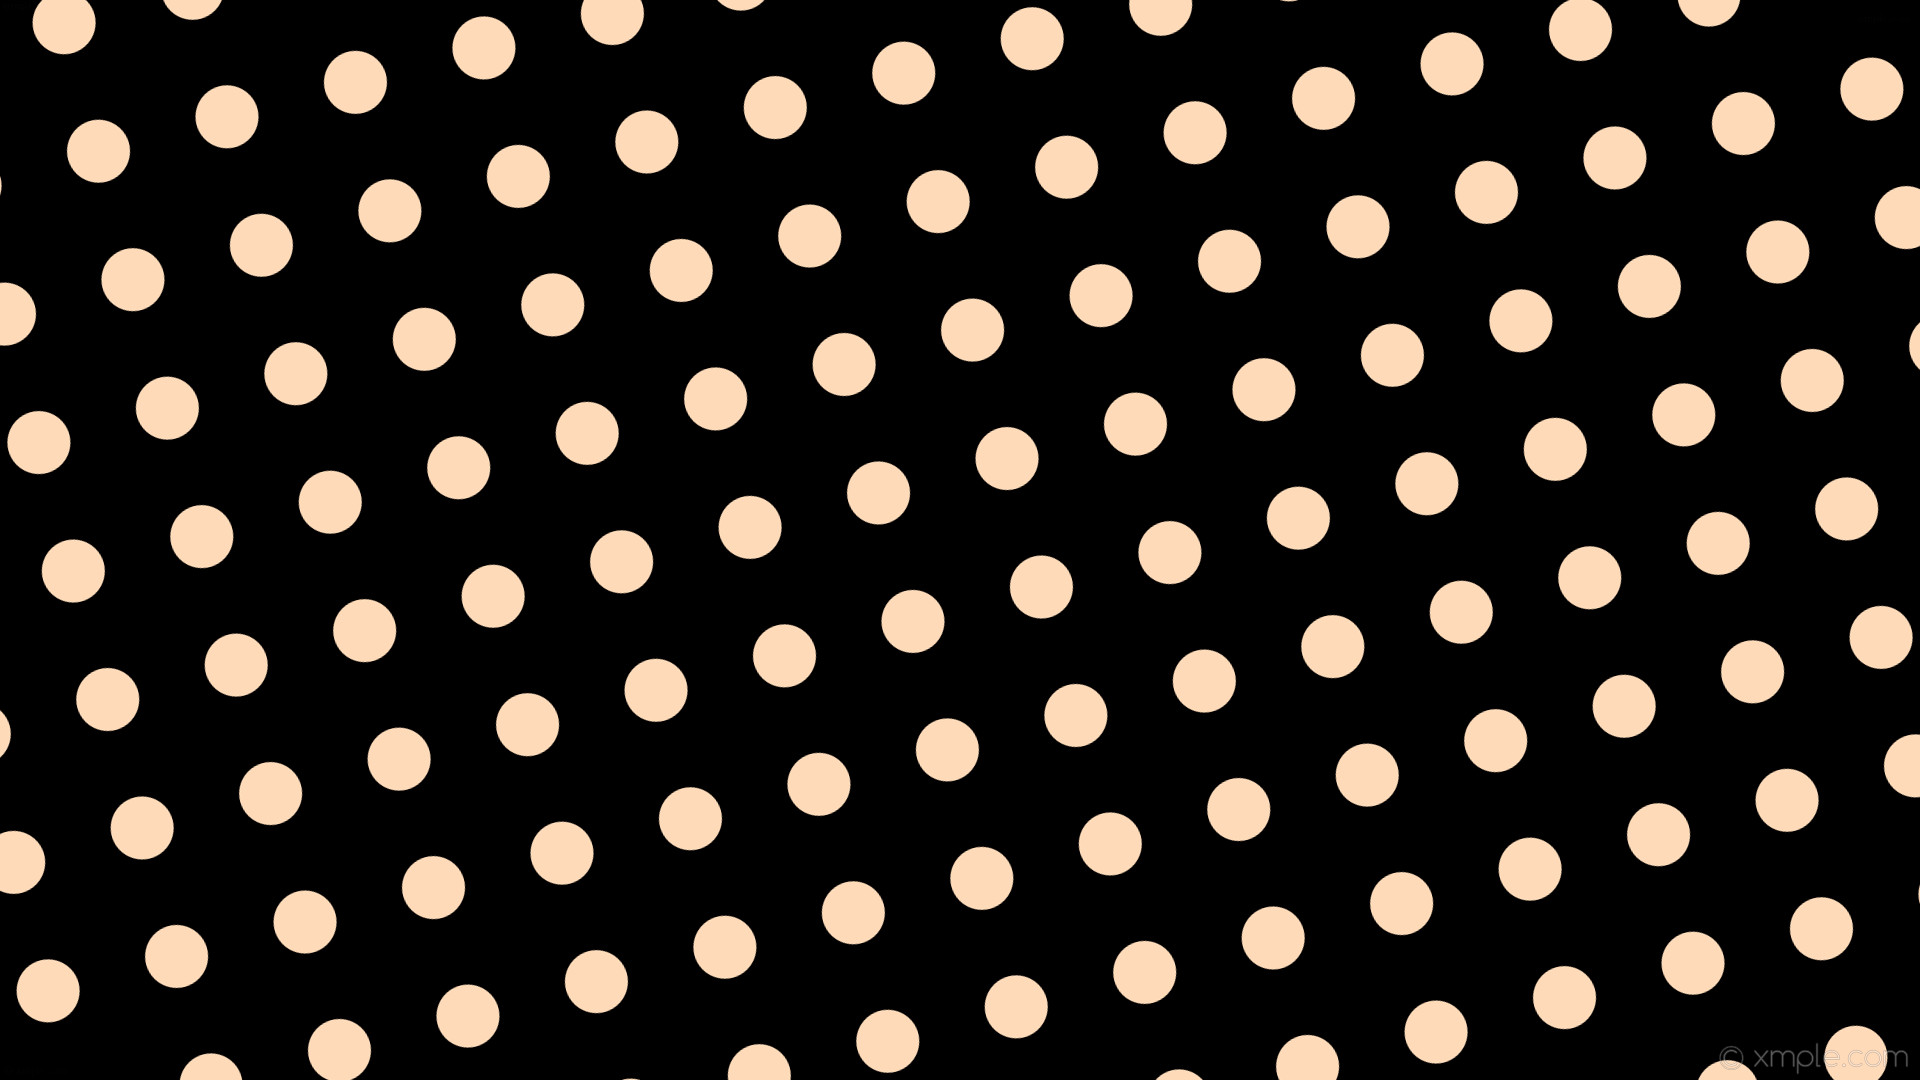 1920x1080 wallpaper dots yellow spots polka black peach puff #000000 #ffdab9 285Â°  63px 133px